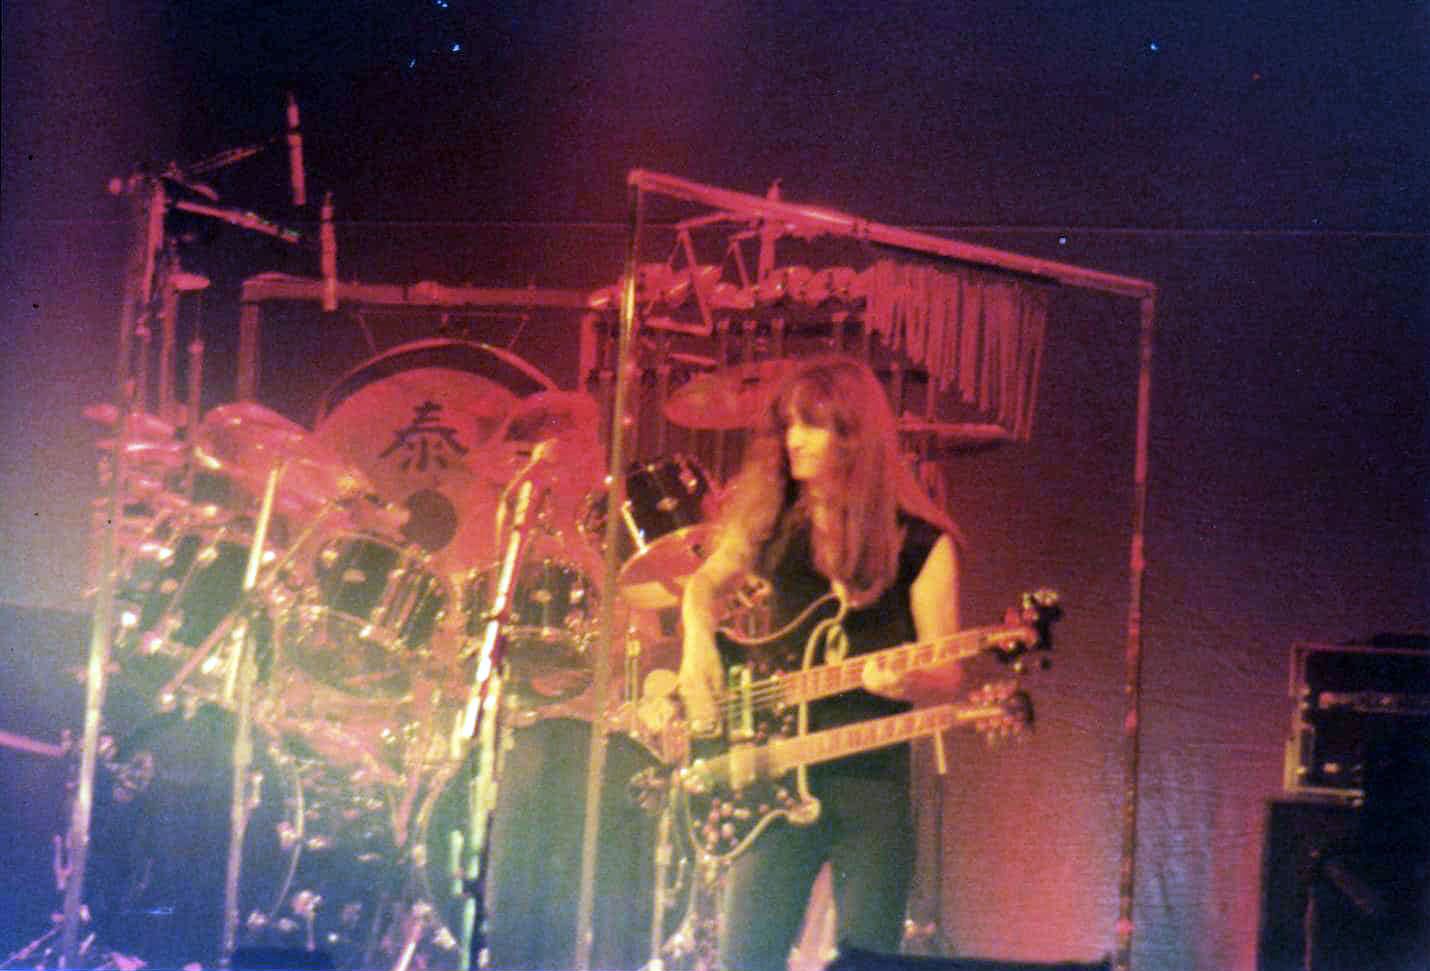 Rush 'Permanent Waves' Tour Pictures - Capital Centre - Largo, MD 08/22/1979